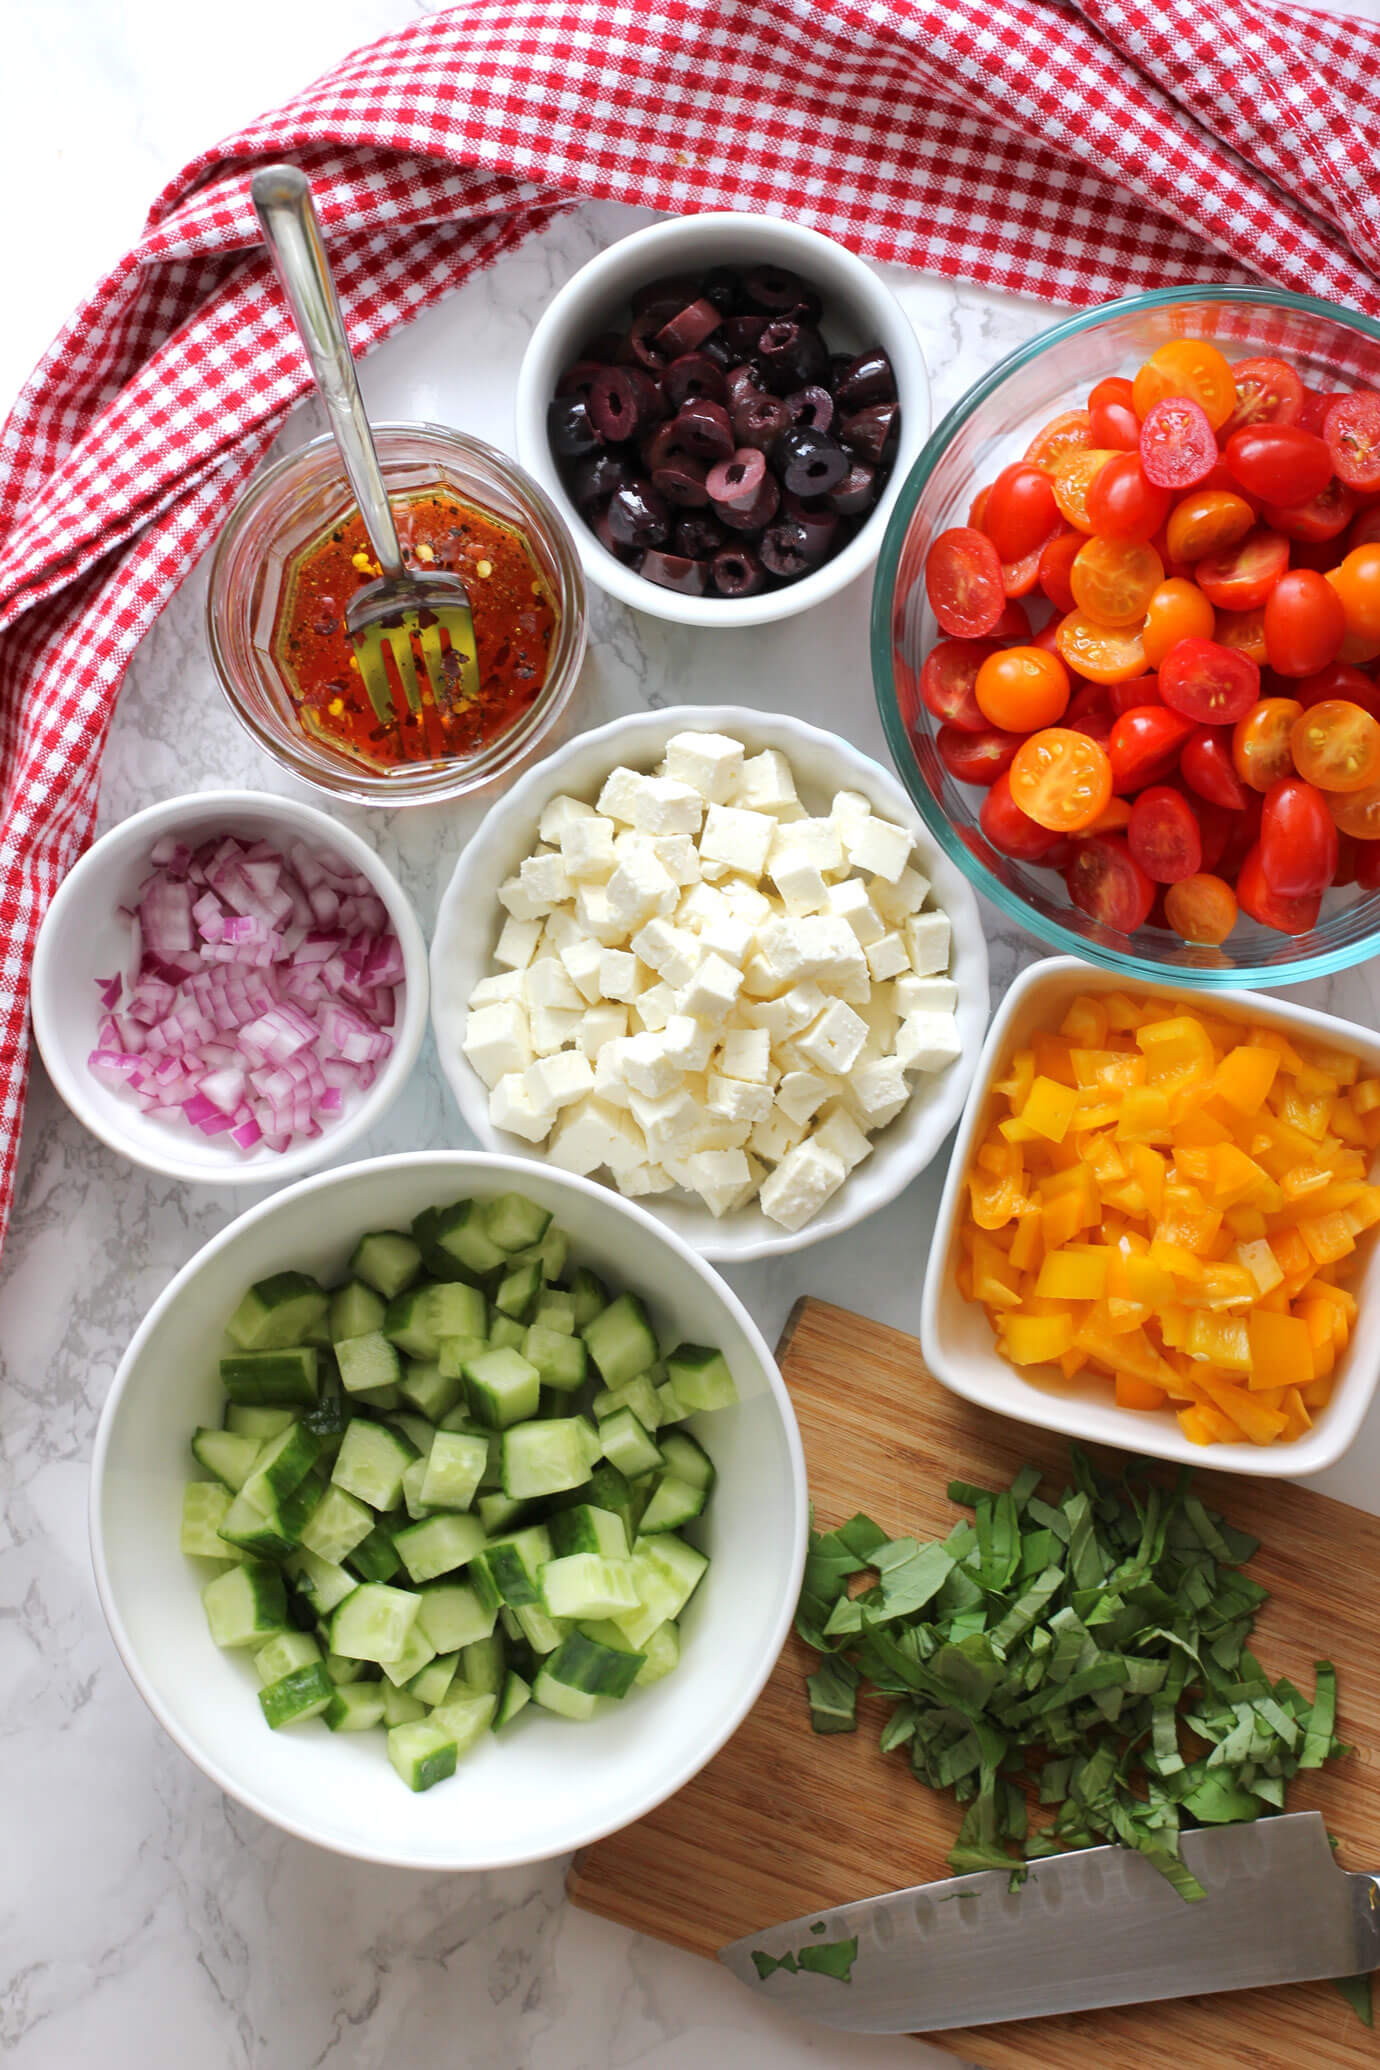 Ingredients cut up for greek pasta salad.